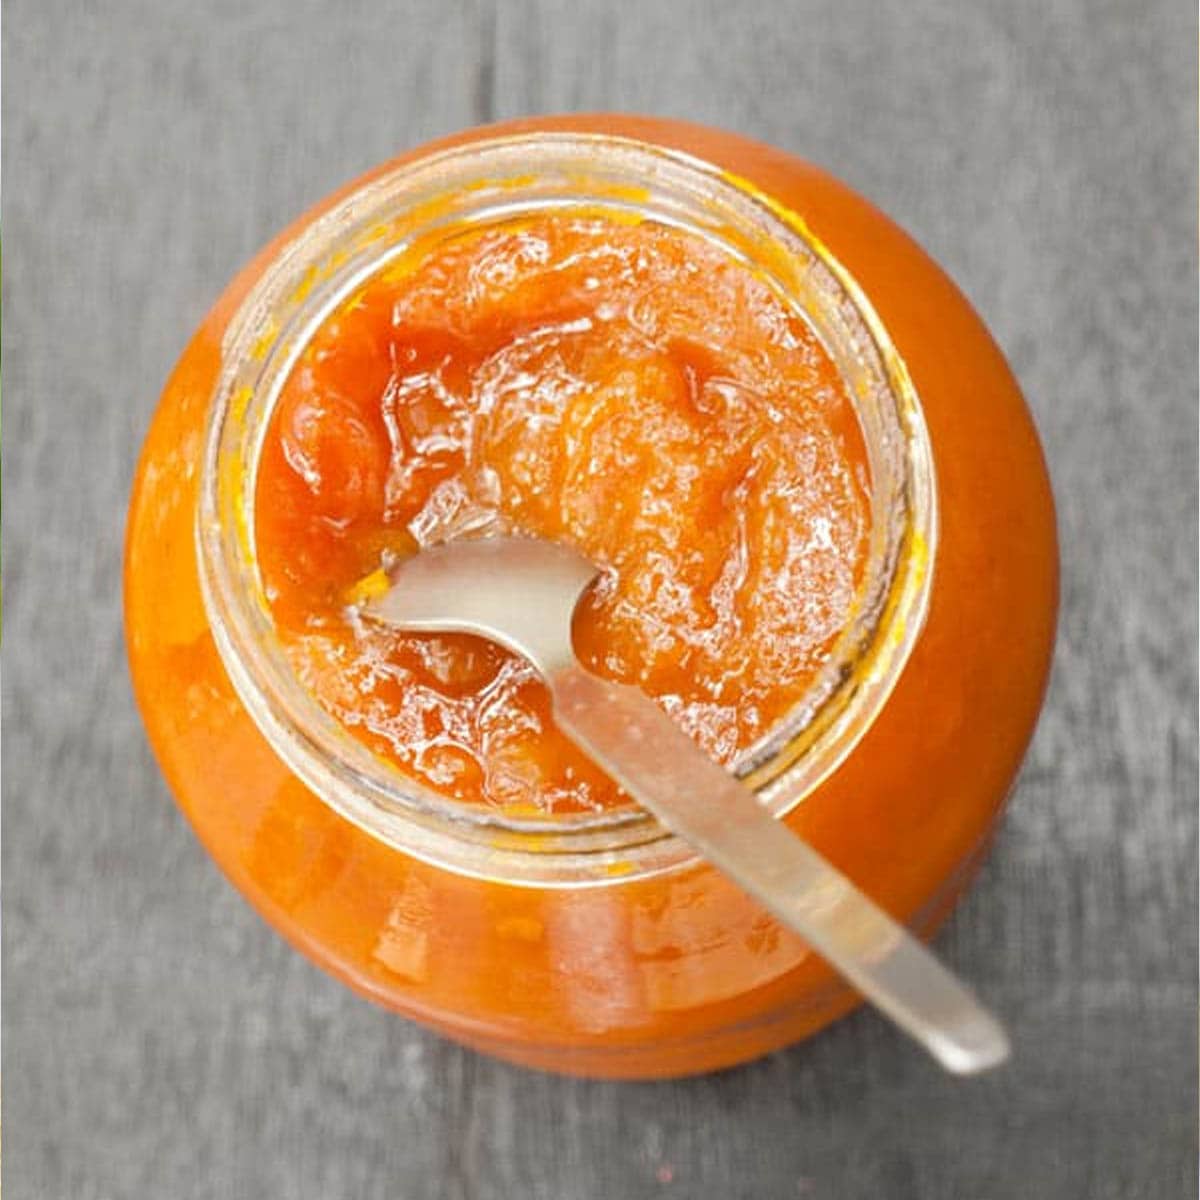 Mango jam in a glass jar with spoon